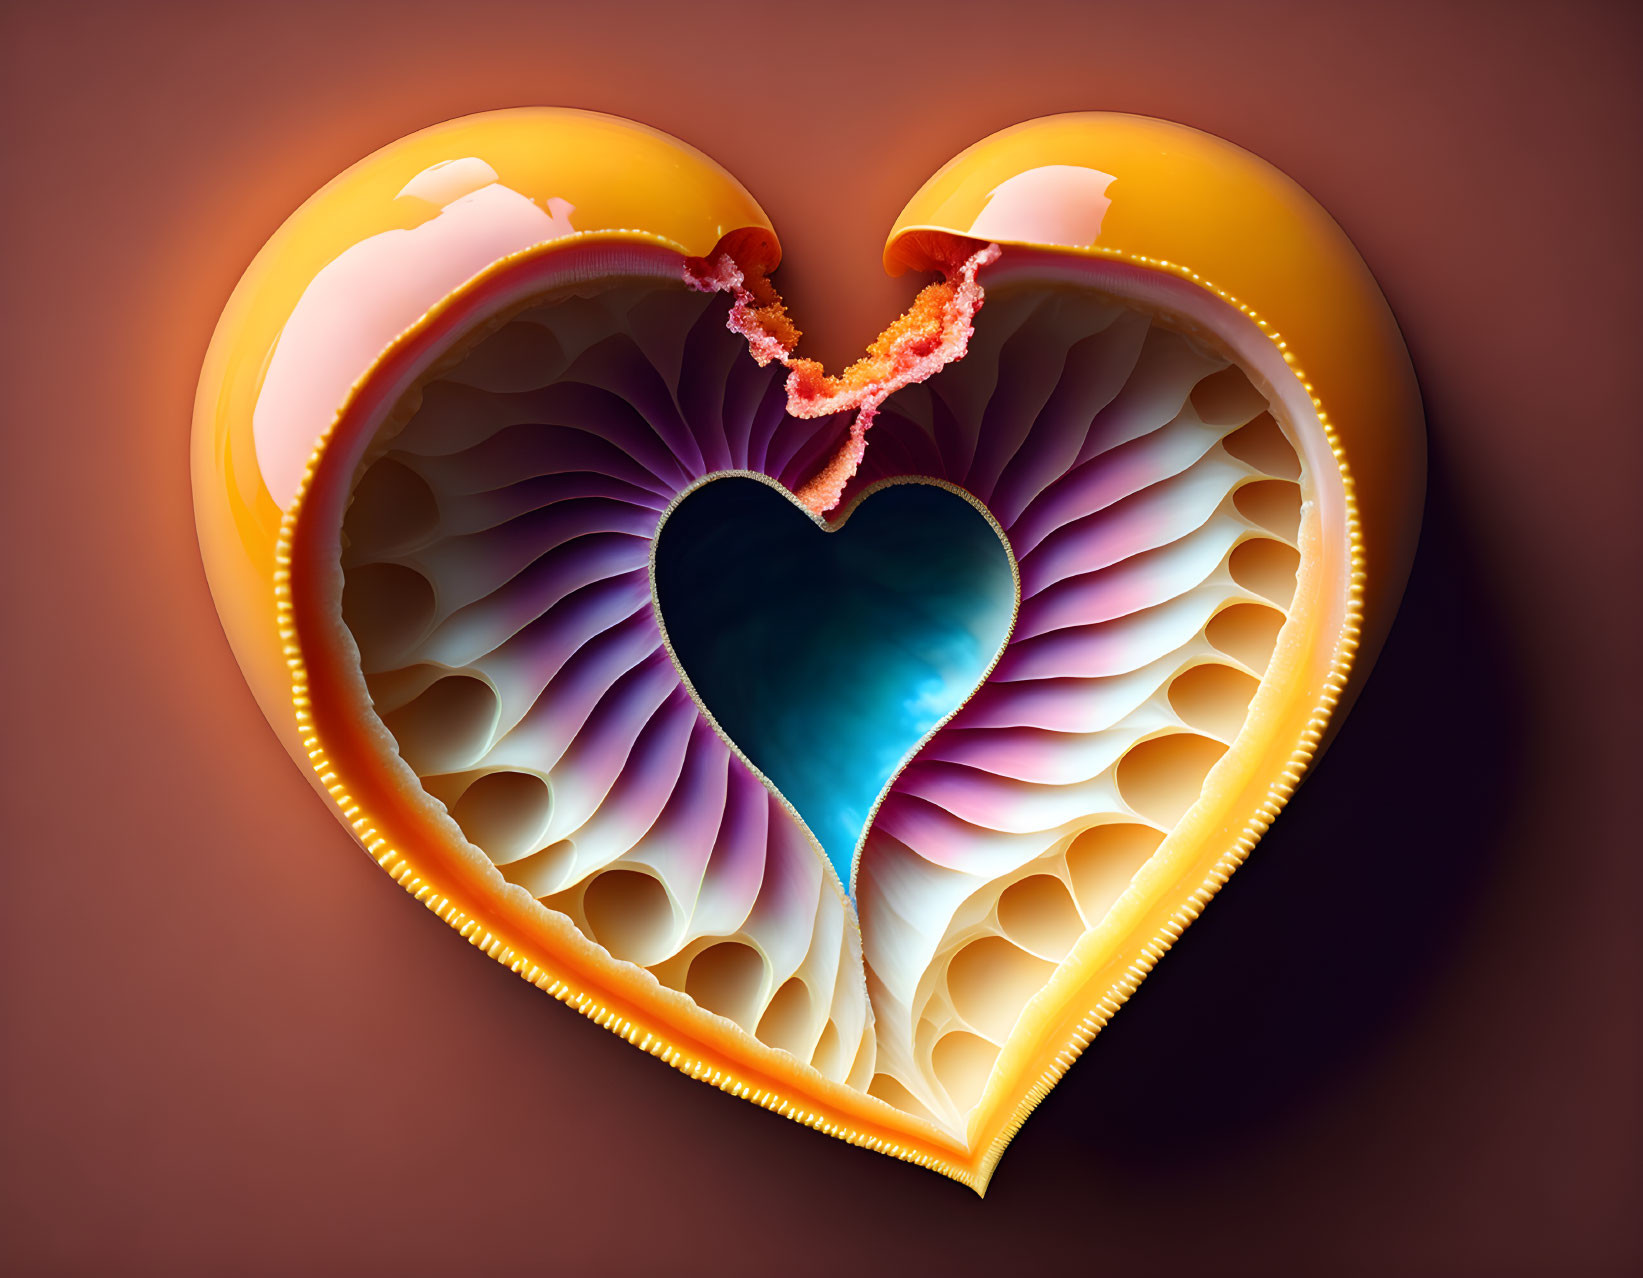 Layered Paper Art: Orange Heart Sculpture with Blue Heart Inside